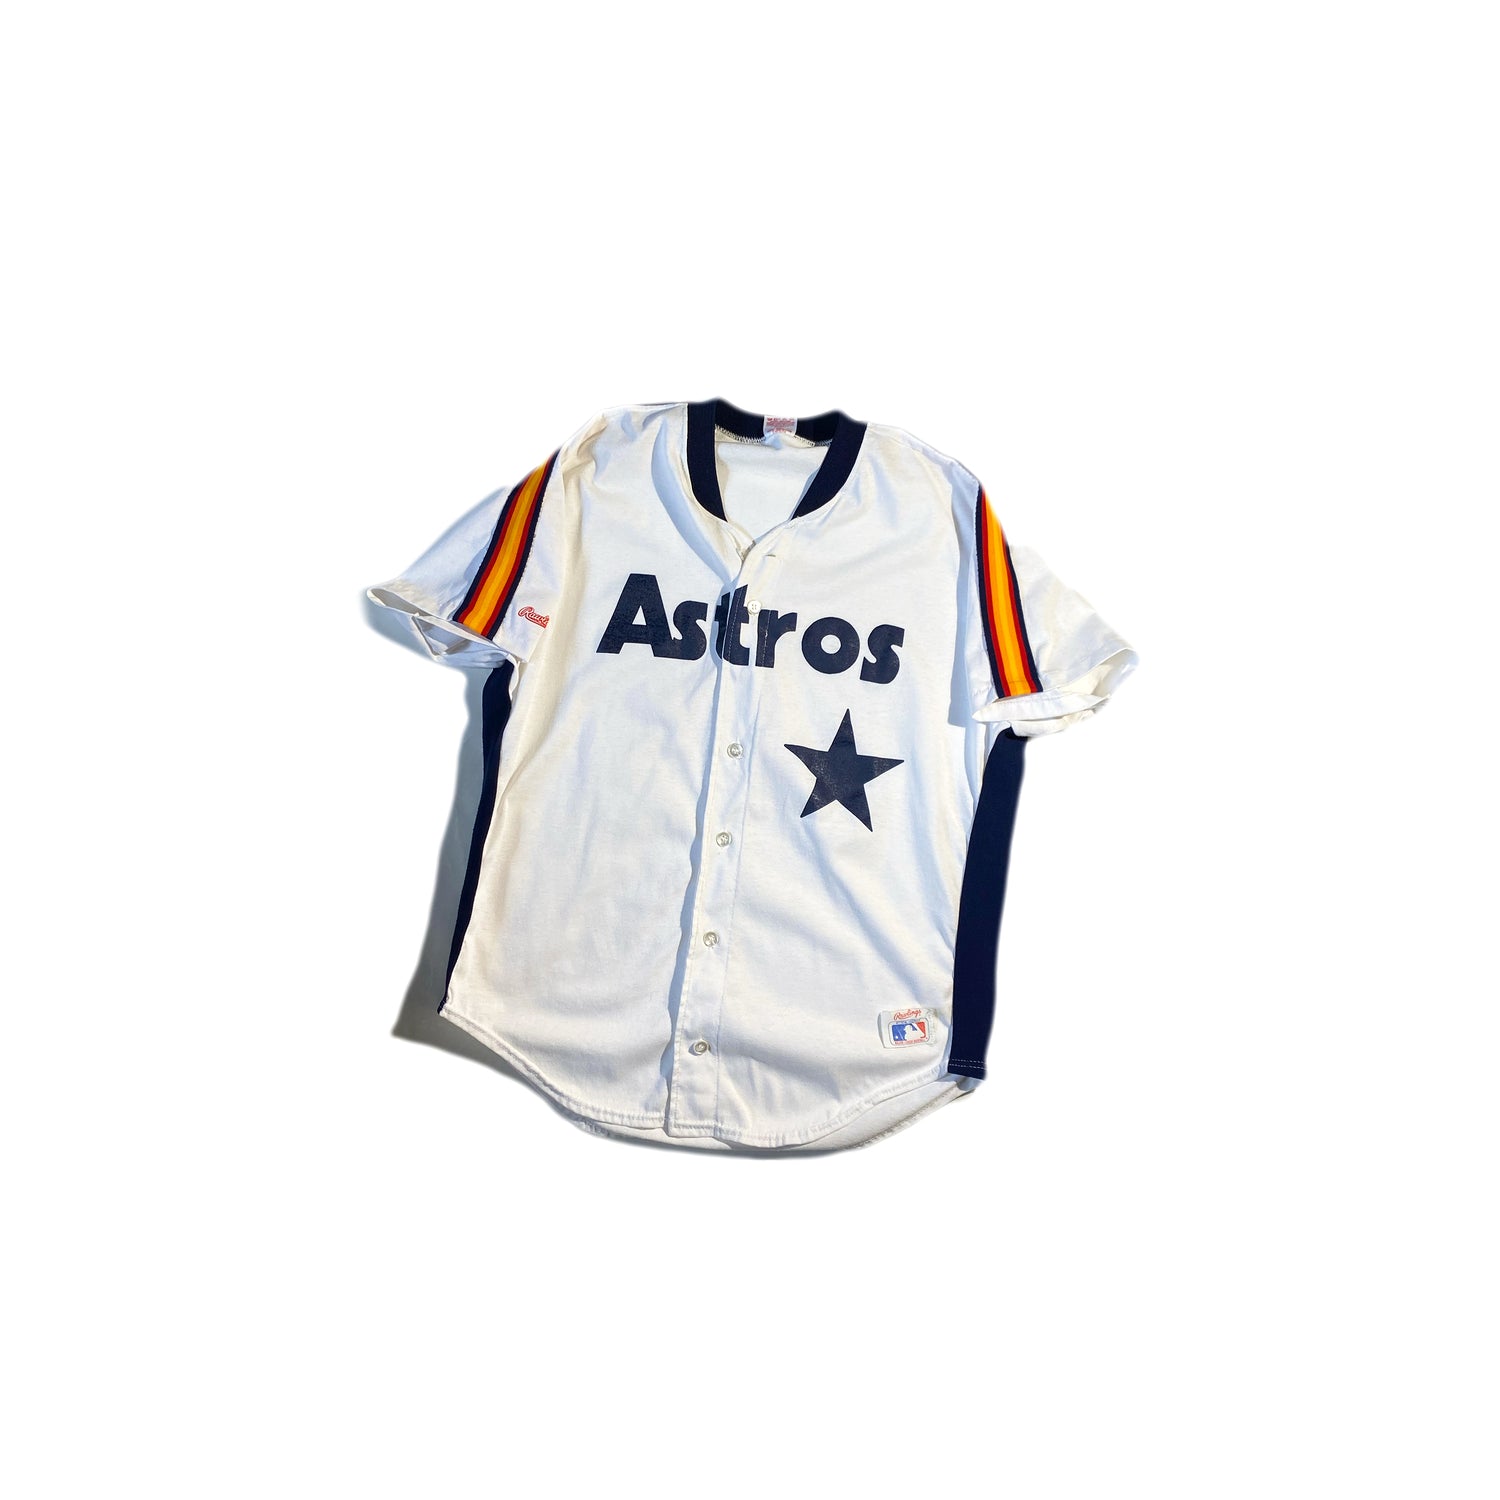 astros white jersey retro